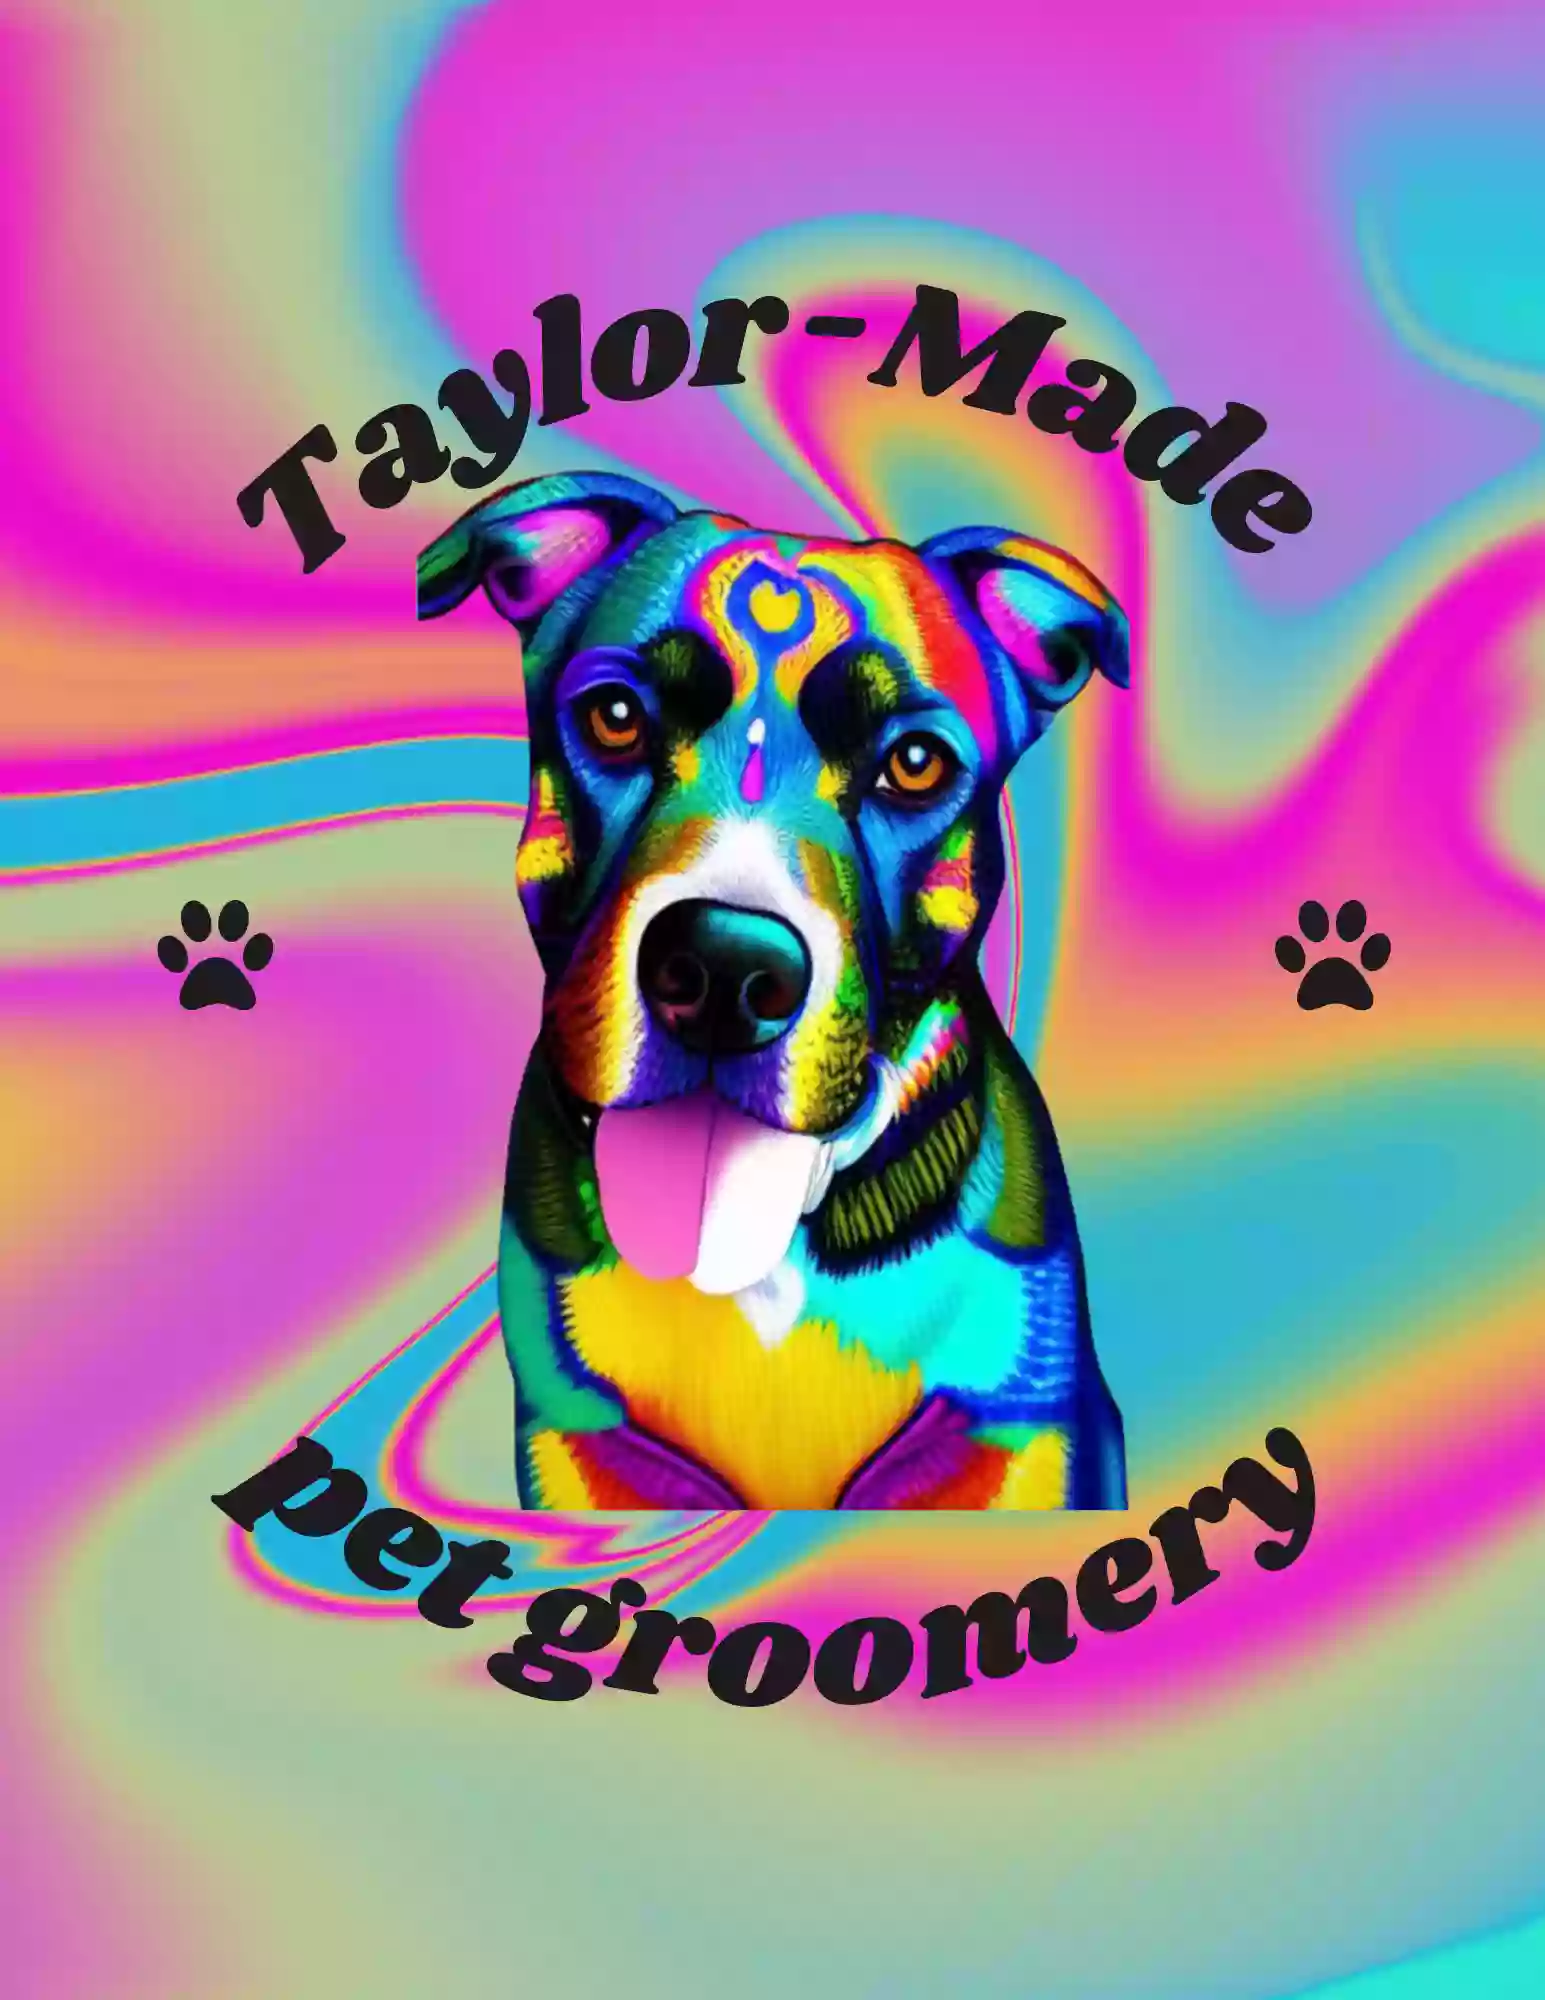 Taylor-Made pet groomery